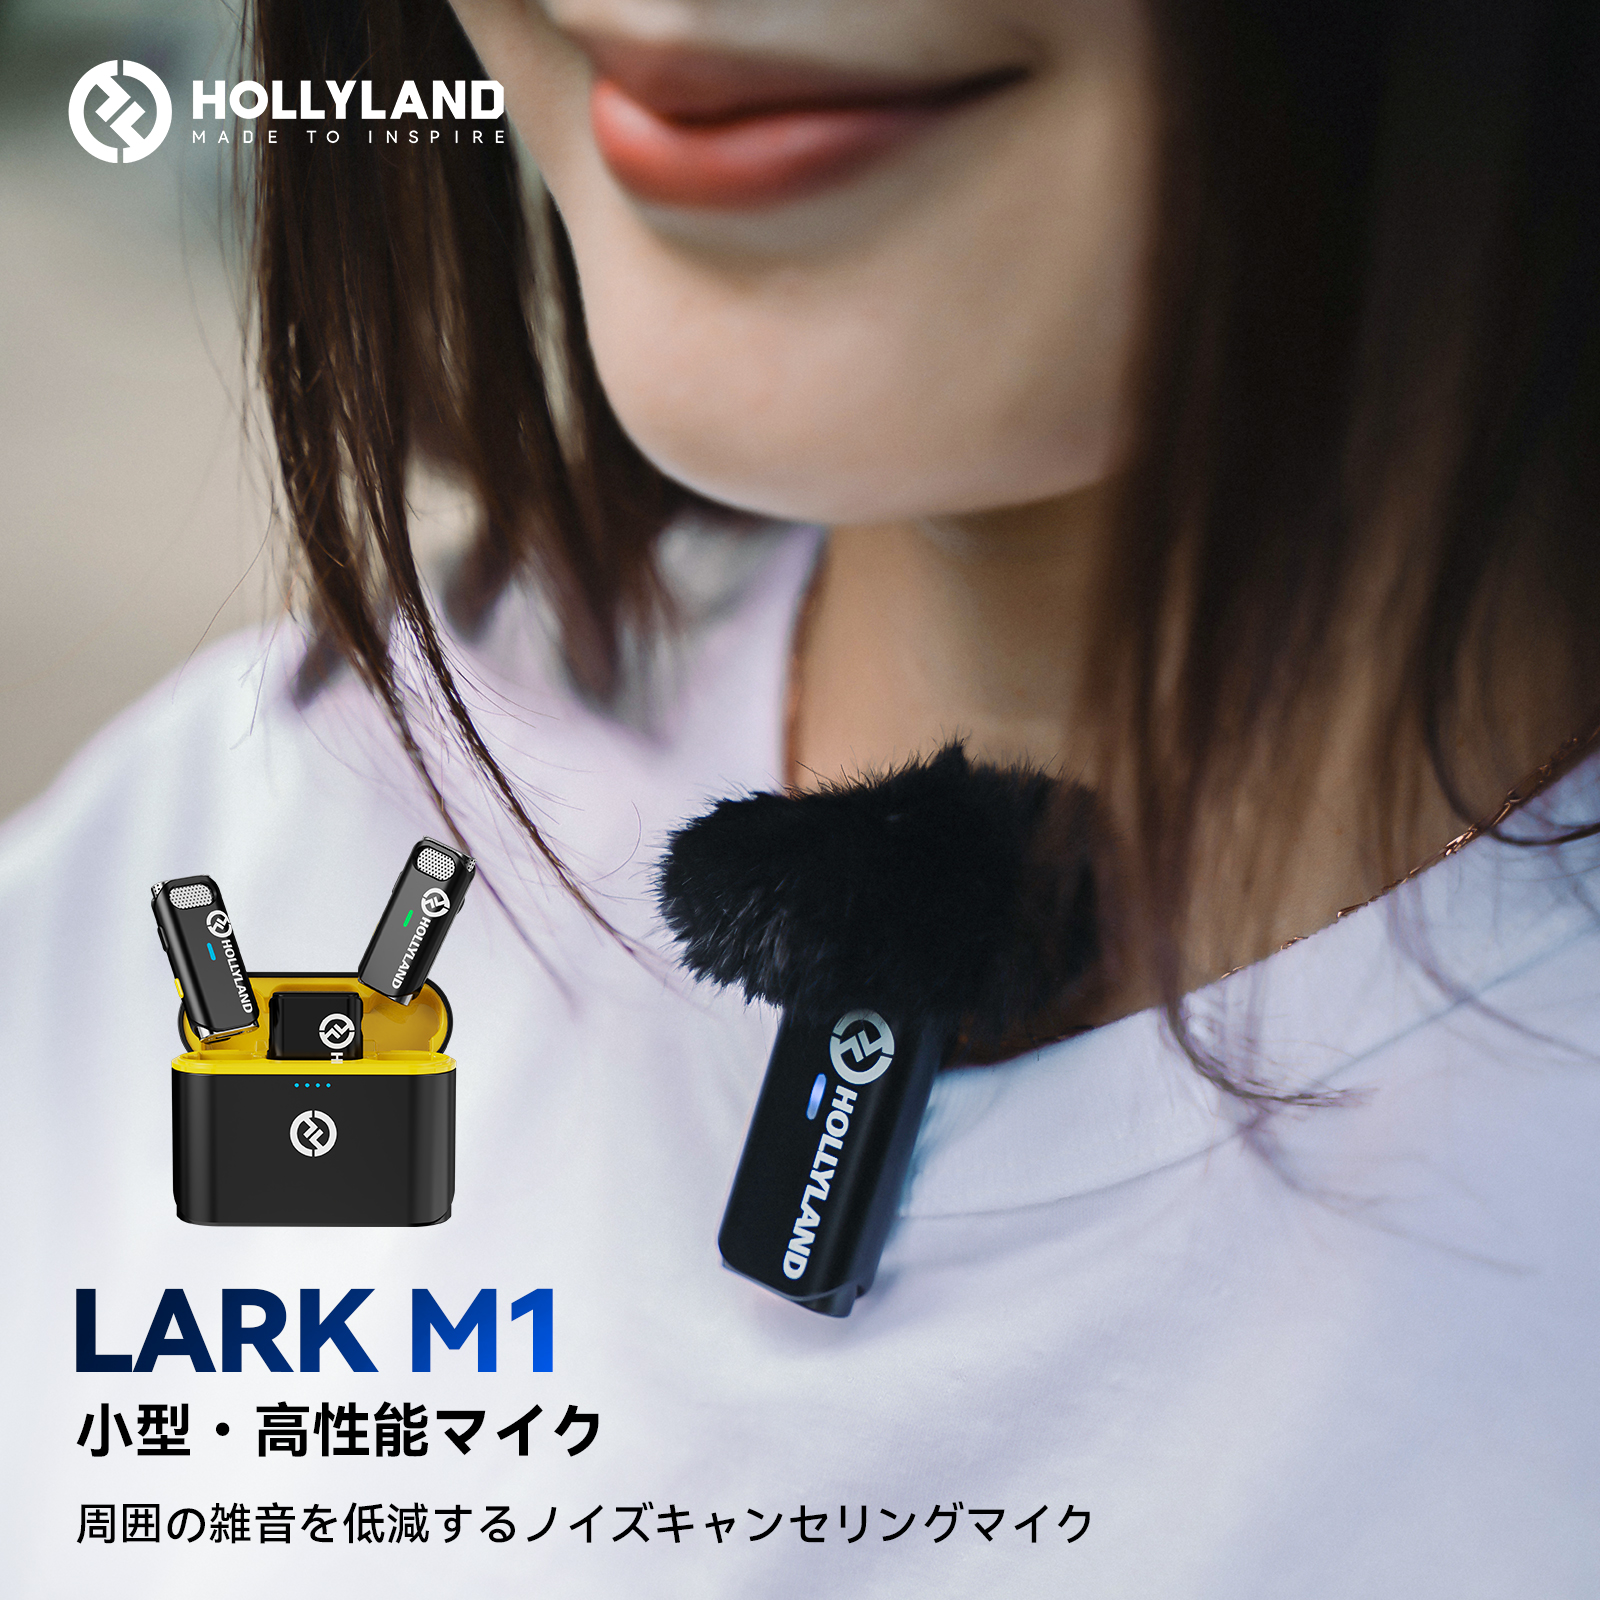 Hollyland Lark C1 iOS スマホ外付けマイク MFi認証済 収納充電ケース付き＆自動ペアリング ピンマイク ワイヤレス 挿すだけの簡単ワイヤレスマイク (iOS-白)